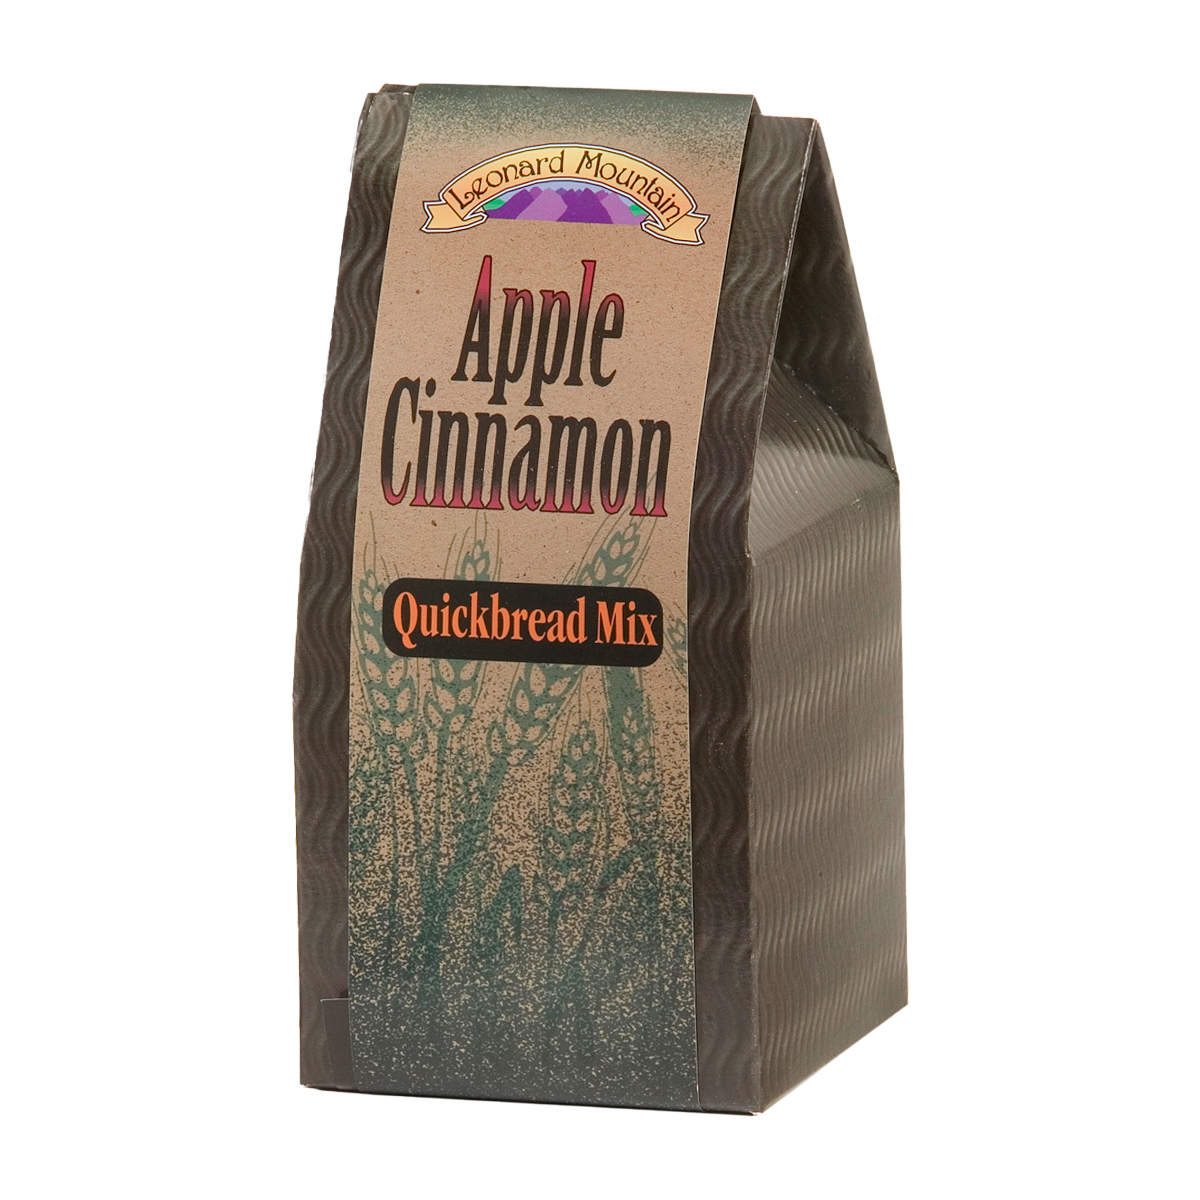 Apple Cinnamon Quick Bread Mix